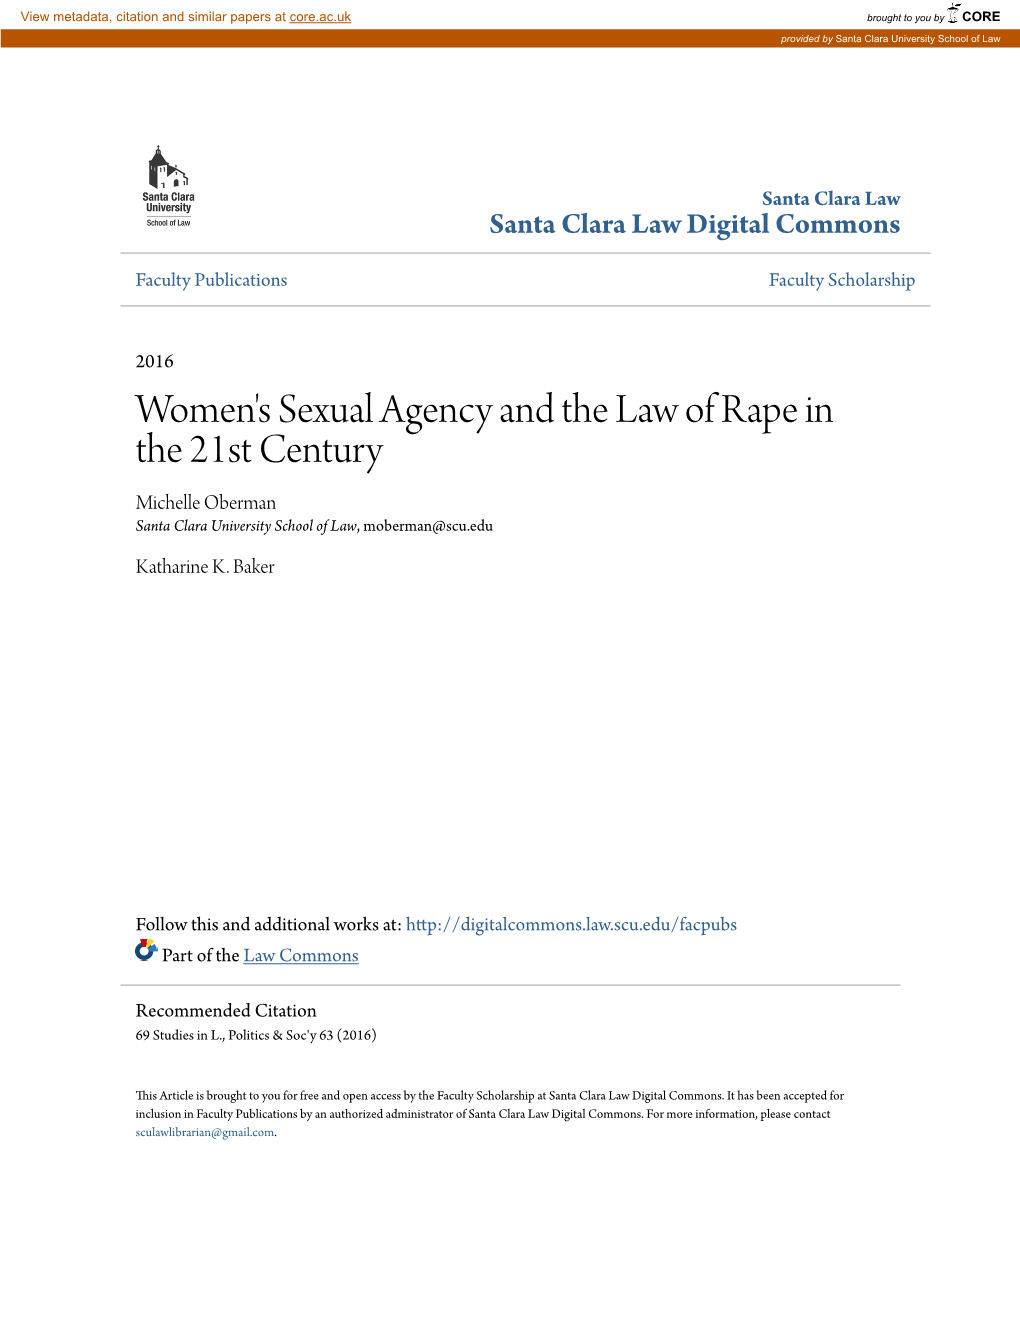 Women's Sexual Agency and the Law of Rape in the 21St Century Michelle Oberman Santa Clara University School of Law, Moberman@Scu.Edu